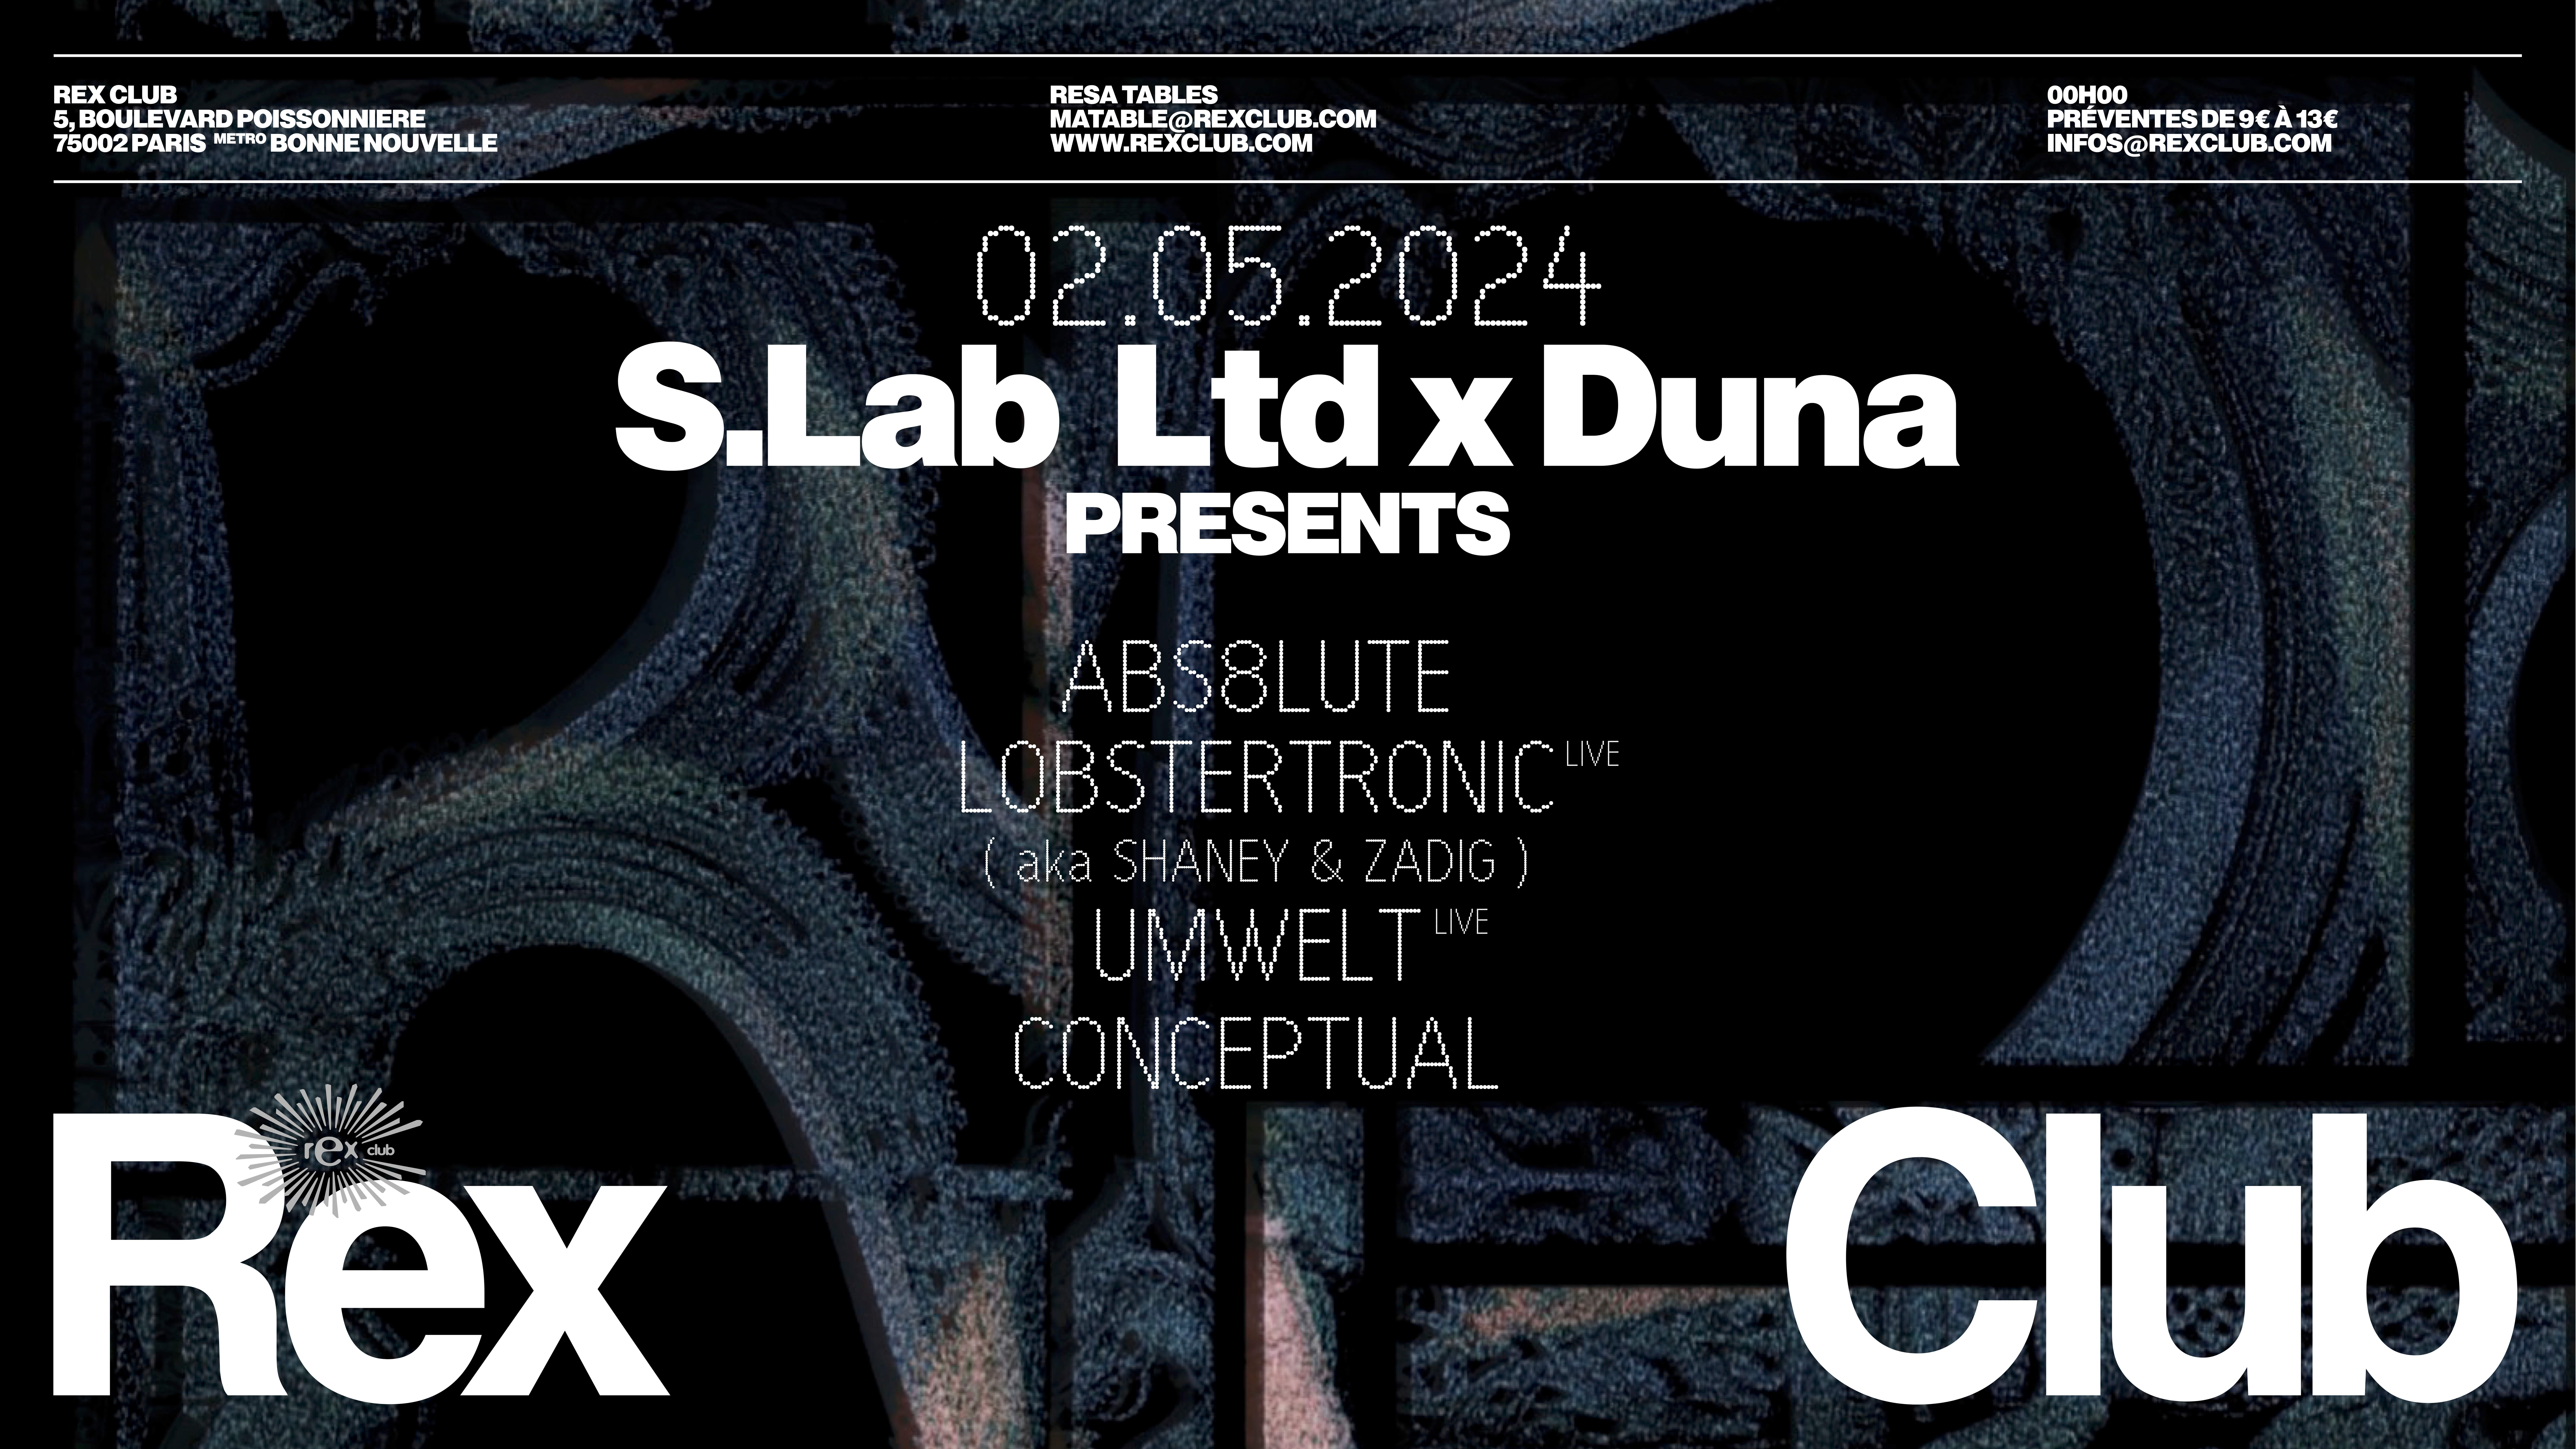 S.Lab Ltd x Duna: abs8lute, Lobstertronic Live (Shaney & Zadig), Umwelt Live, CONCEPTUAL - Página frontal